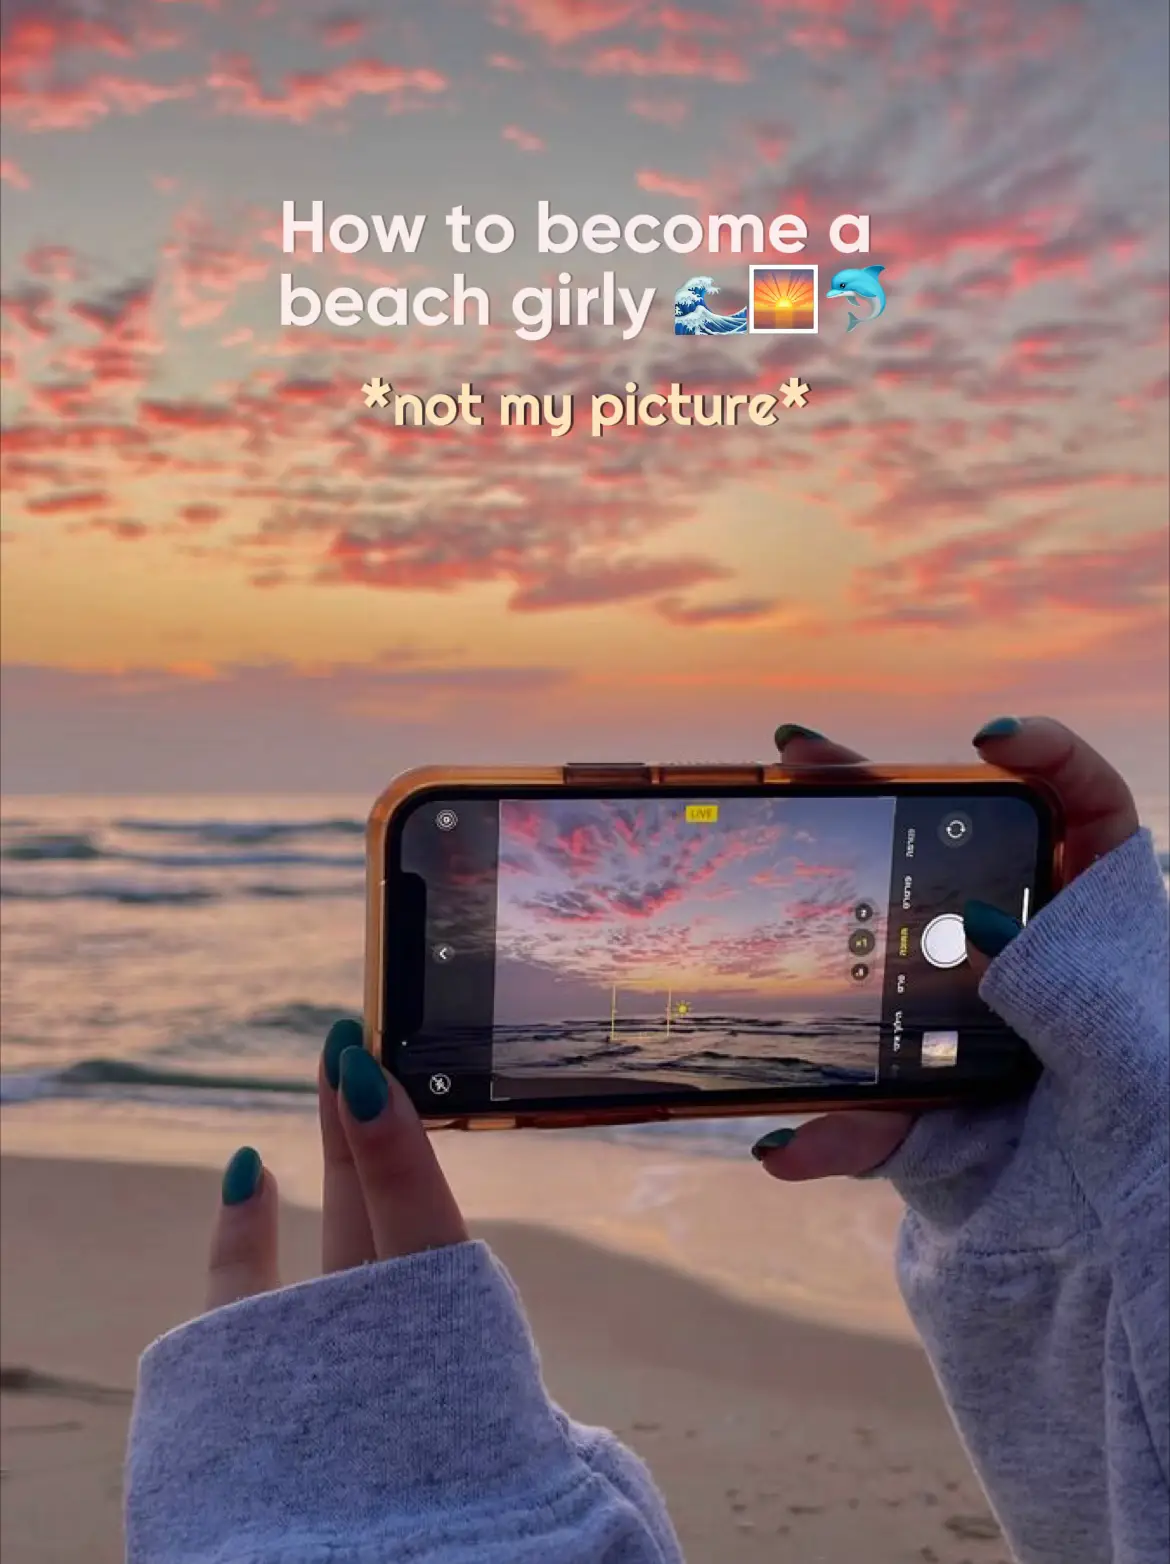  A woman is taking a selfie on a beach.